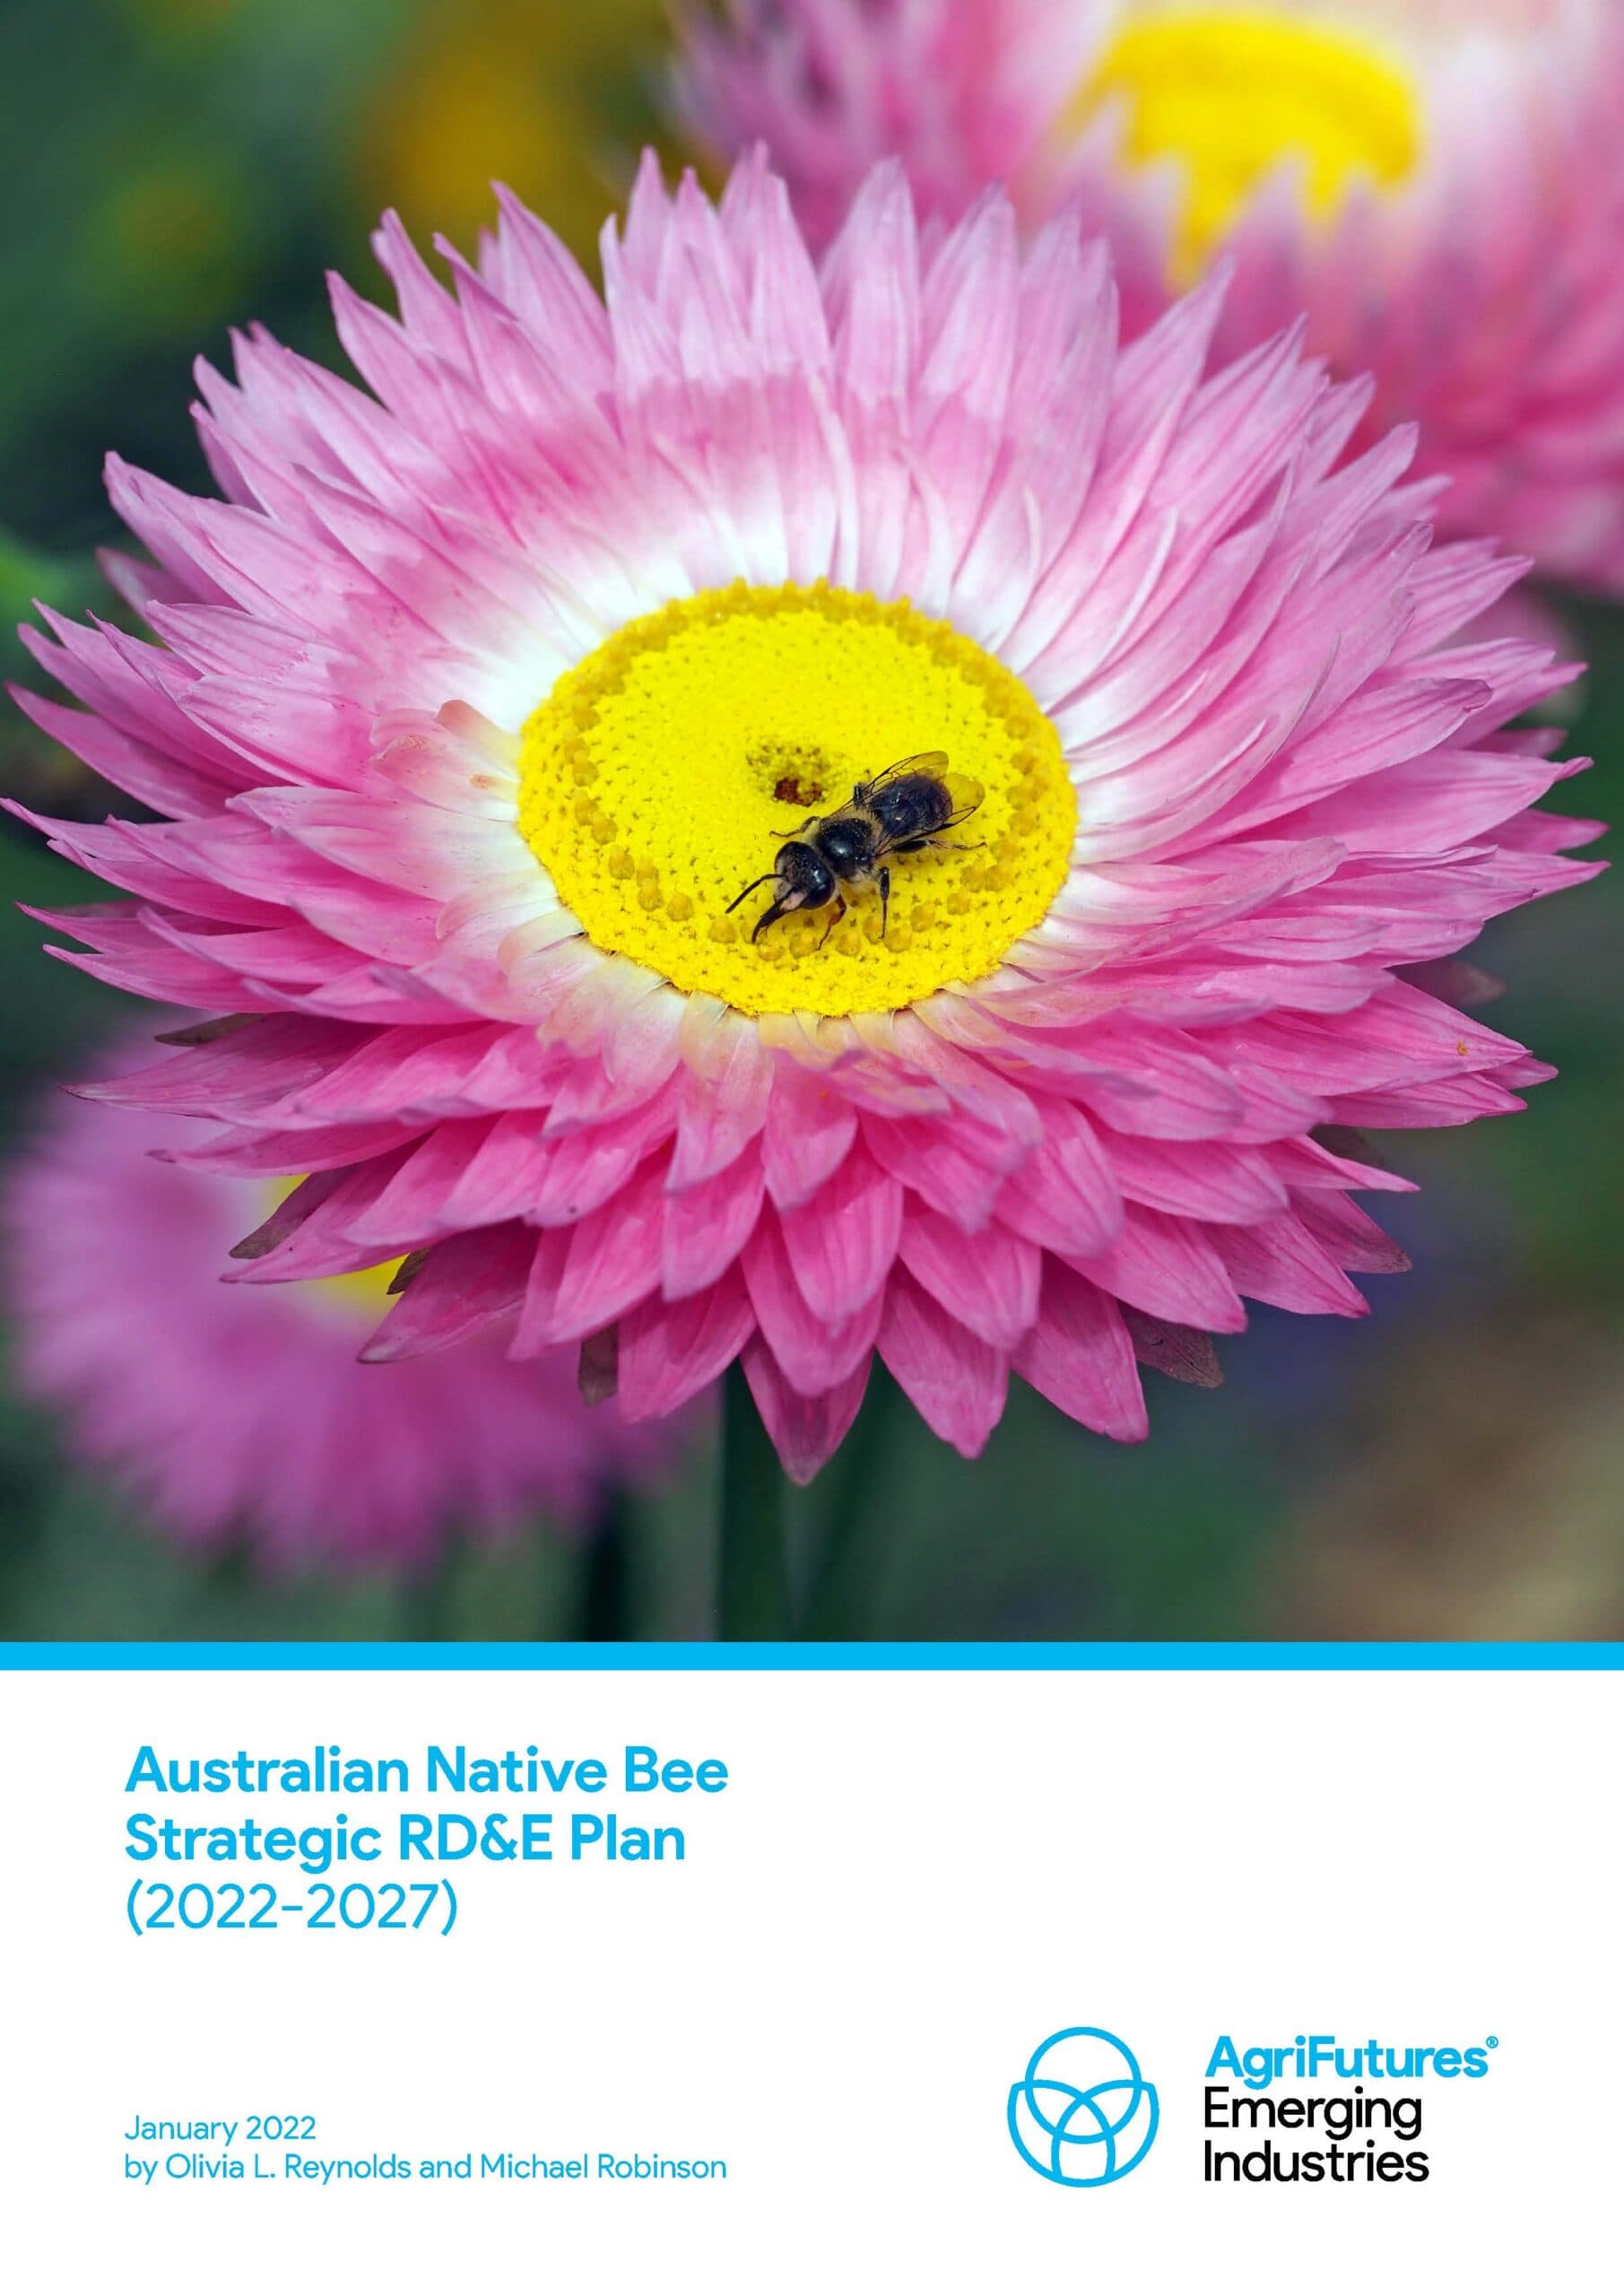 Australian Native Bee Strategic RD&E Plan - image